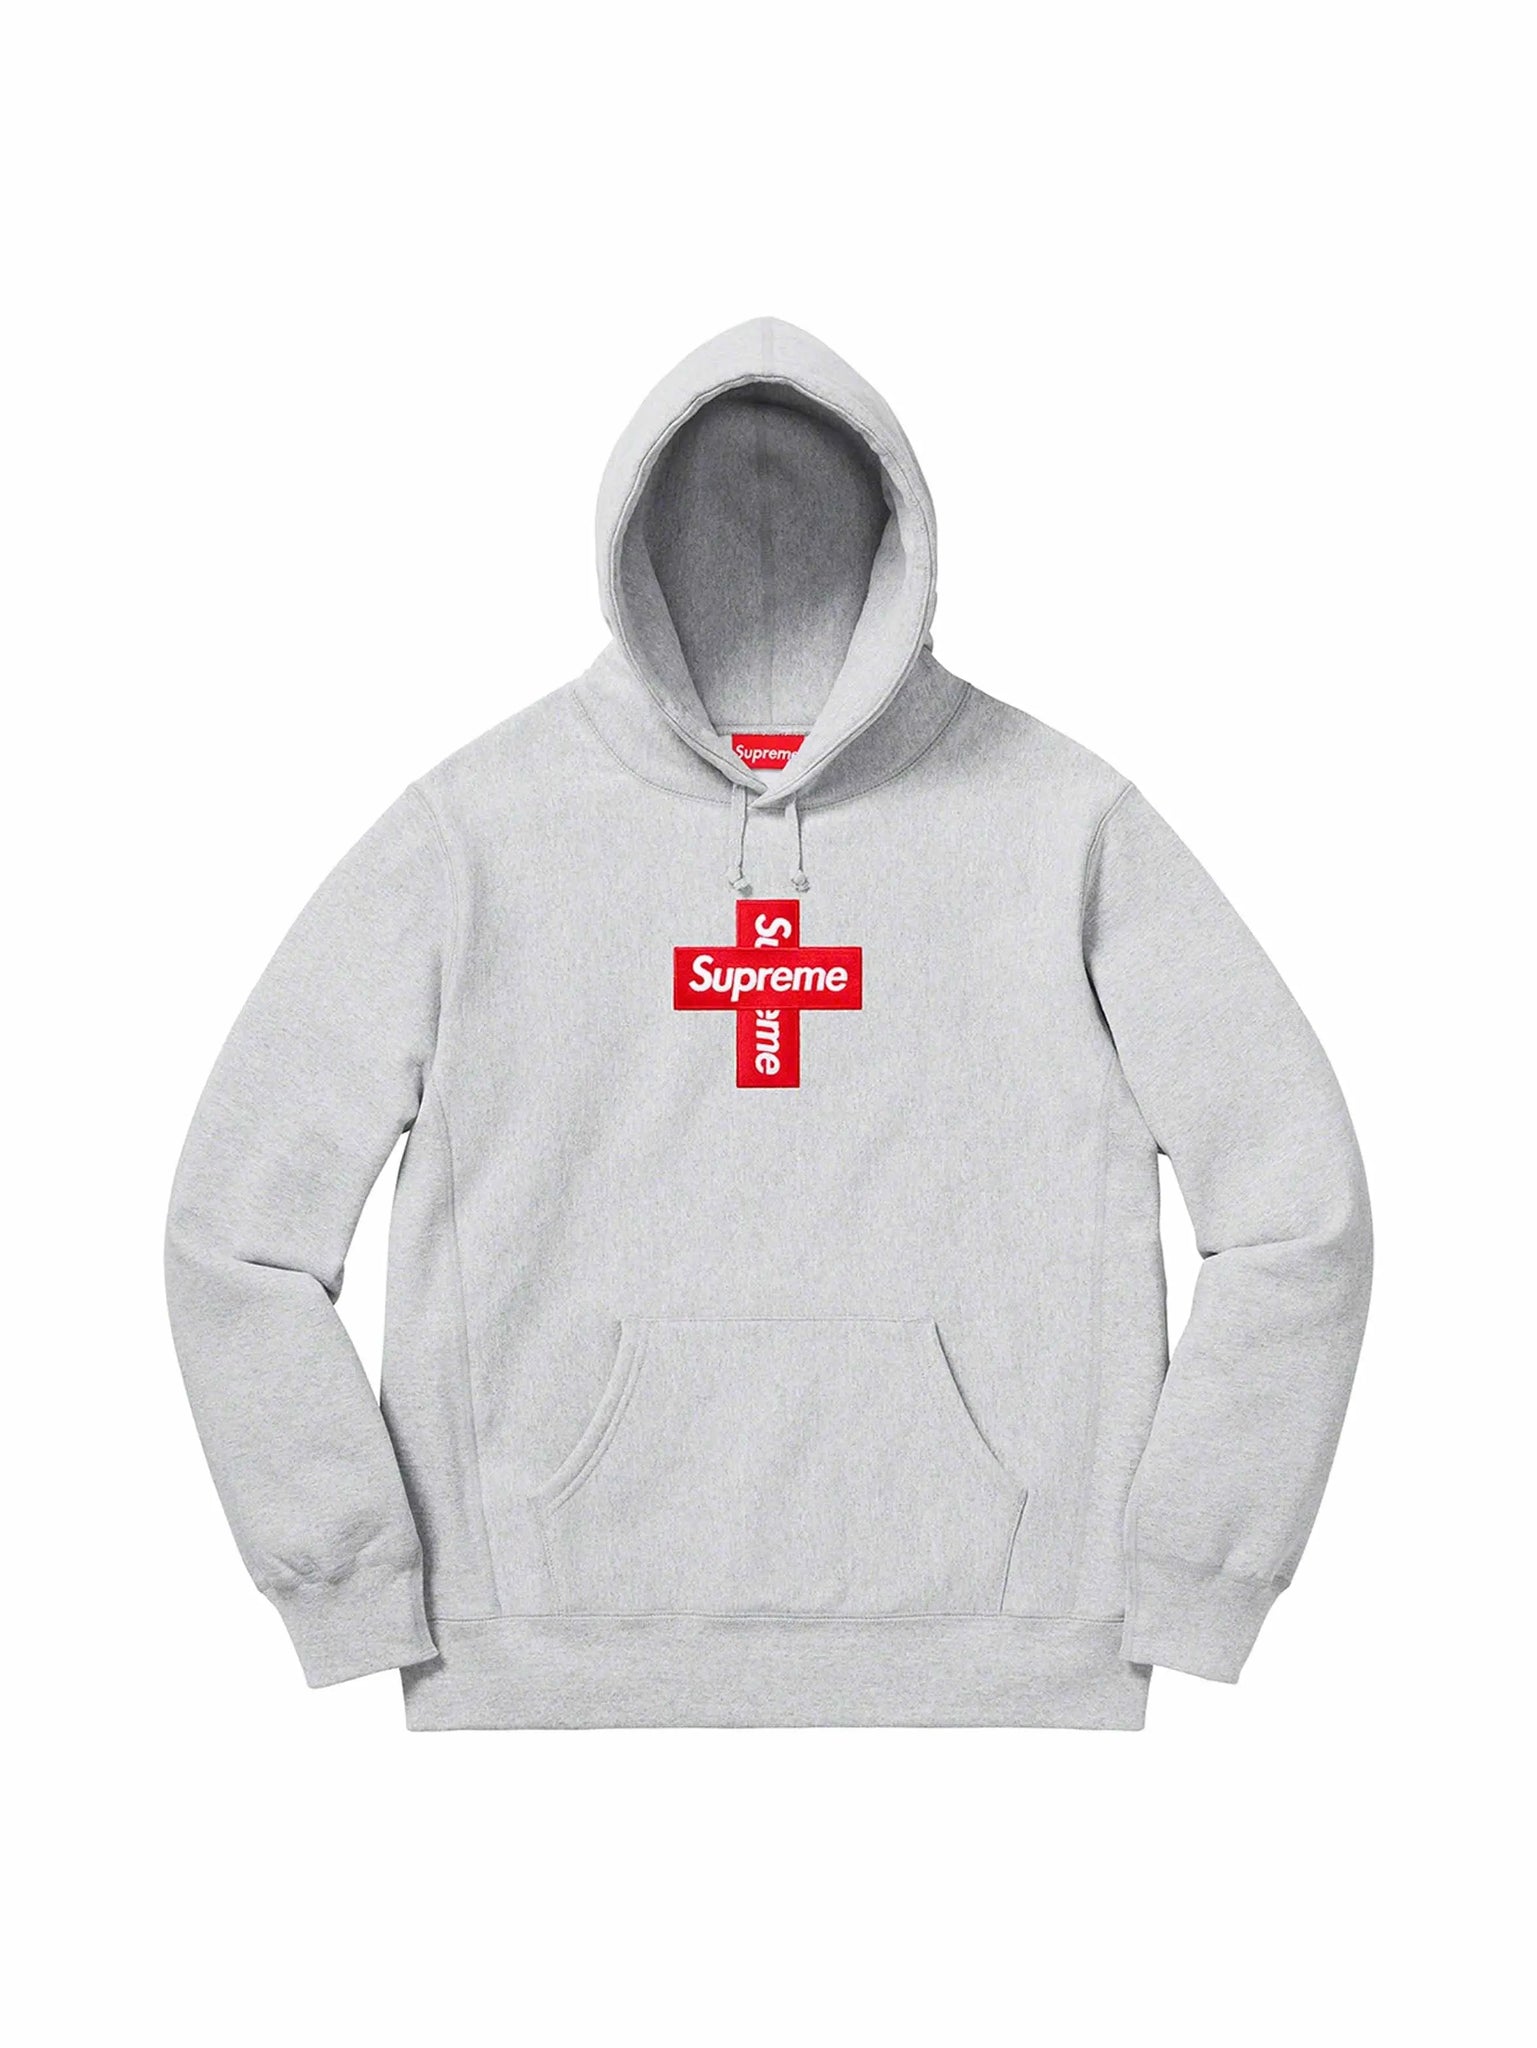 Supreme Cross Box Logo Hooded Sweatshirt Heather Grey in Melbourne, Australia - Prior